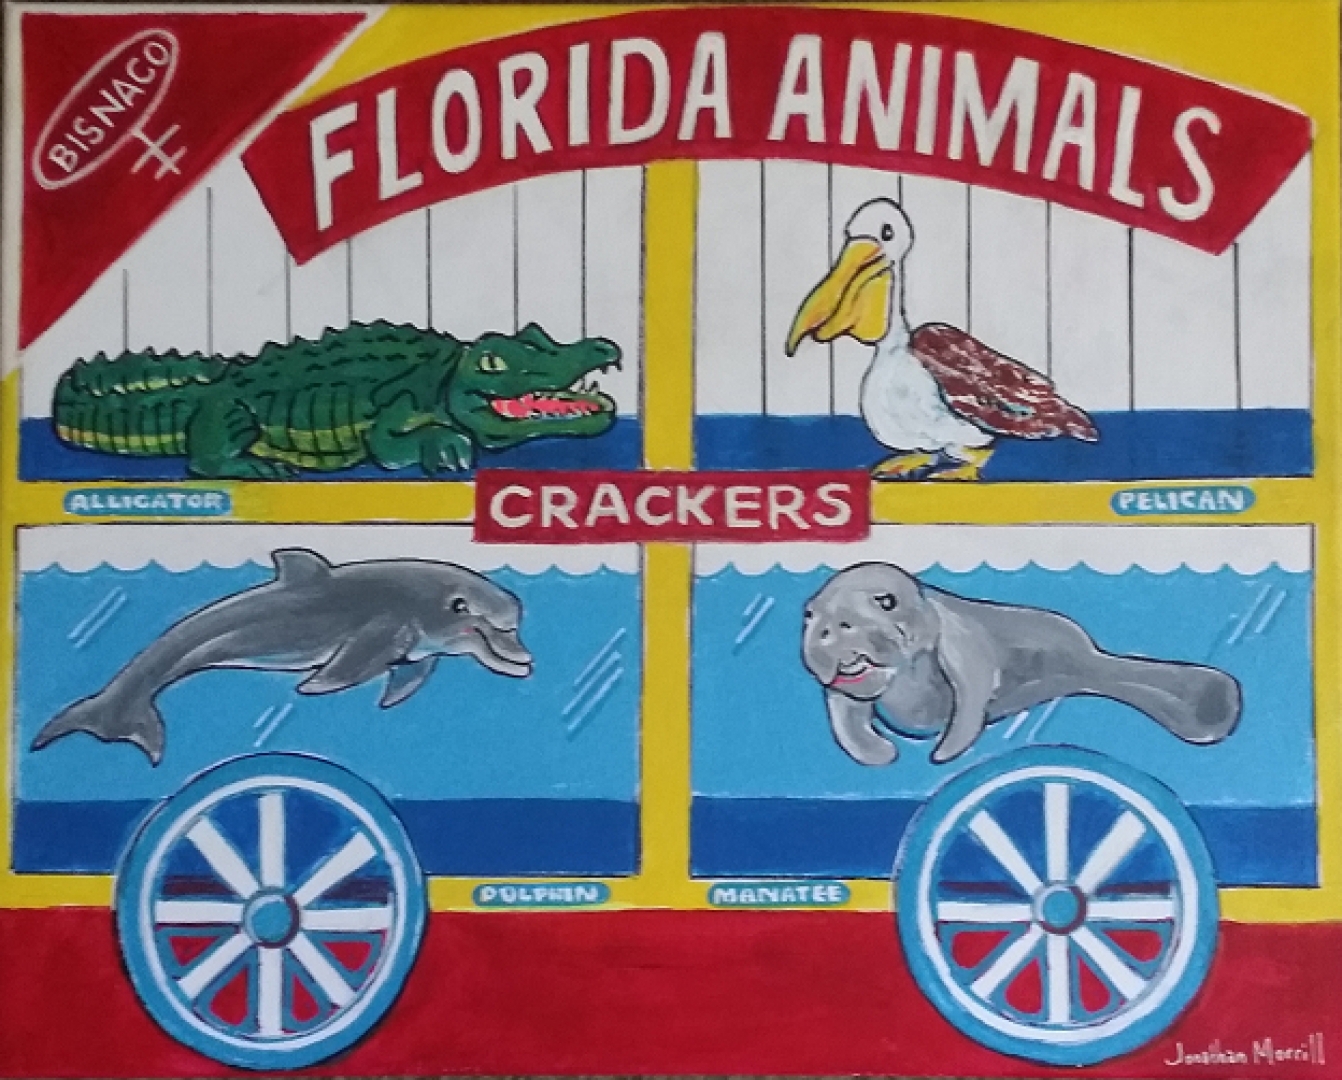 Florida Animal Crackers